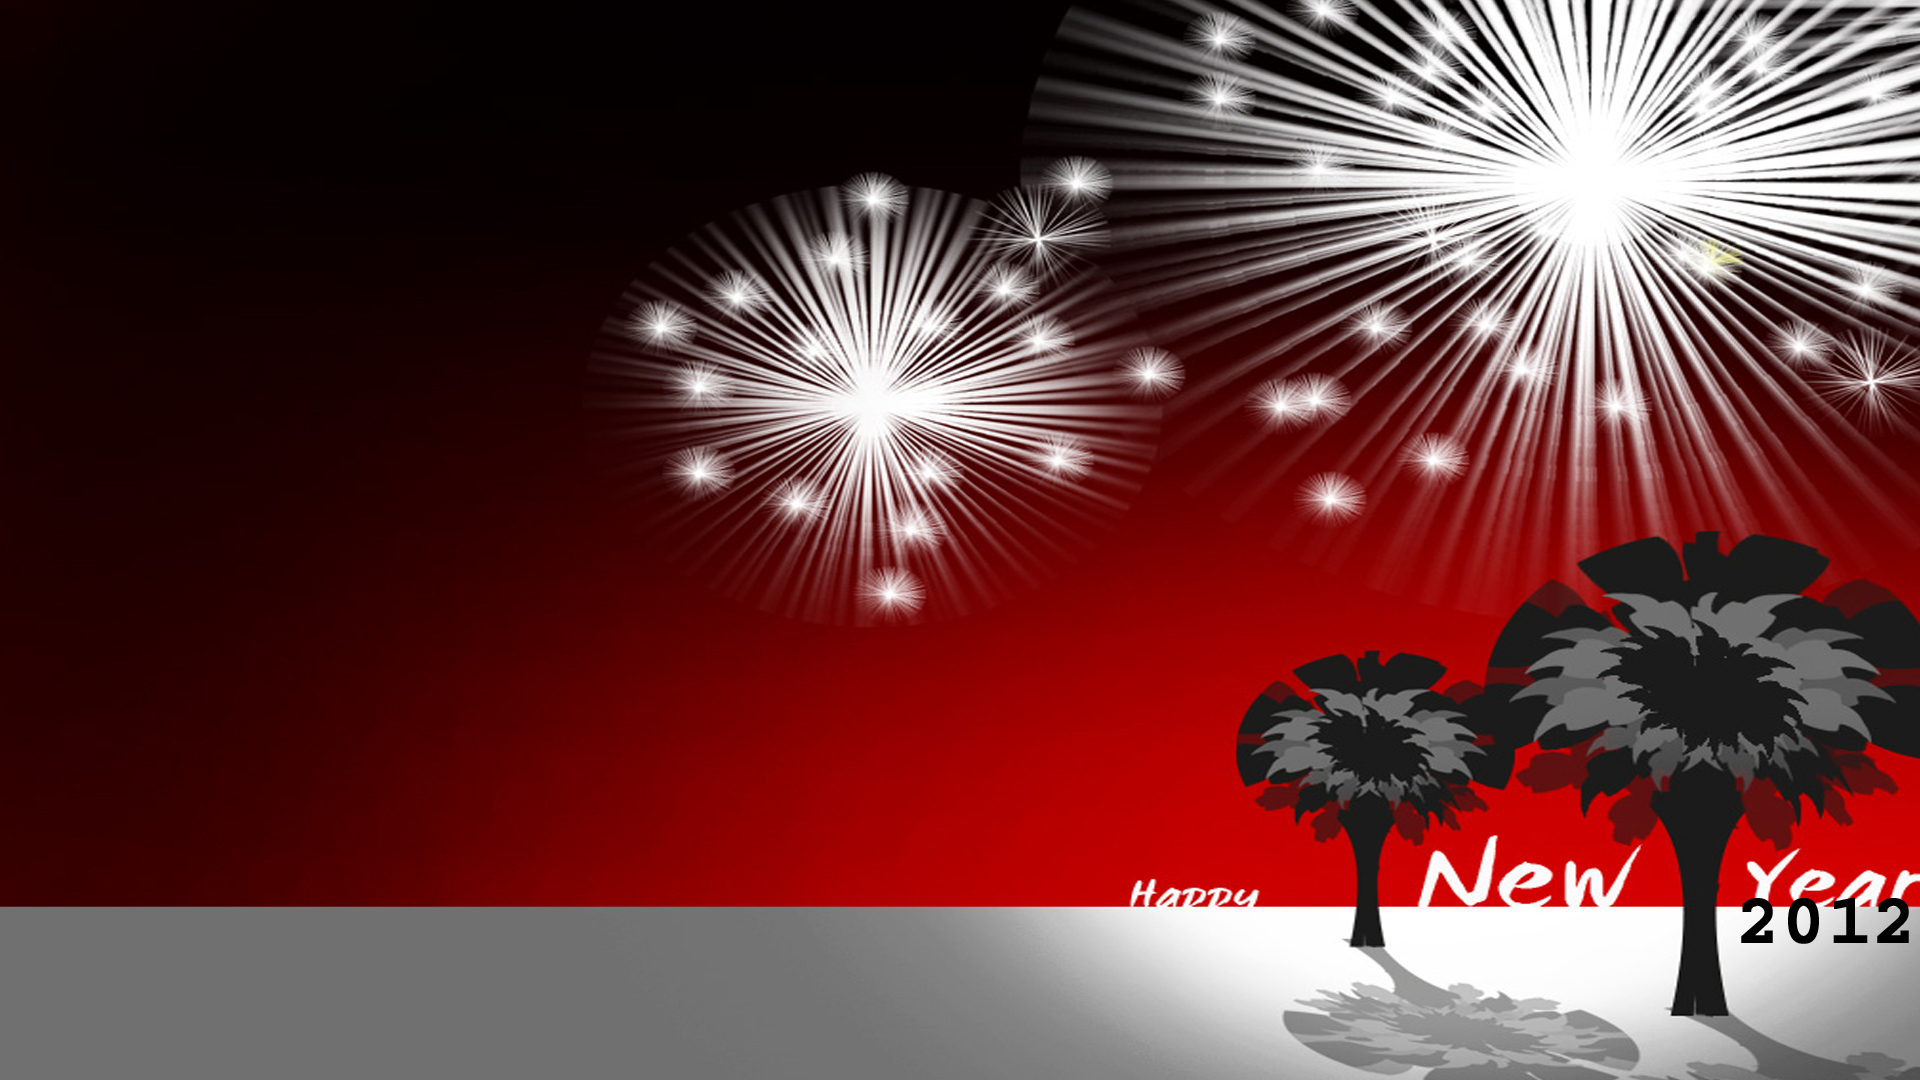 2012 Happy new year celebration powerpoint background